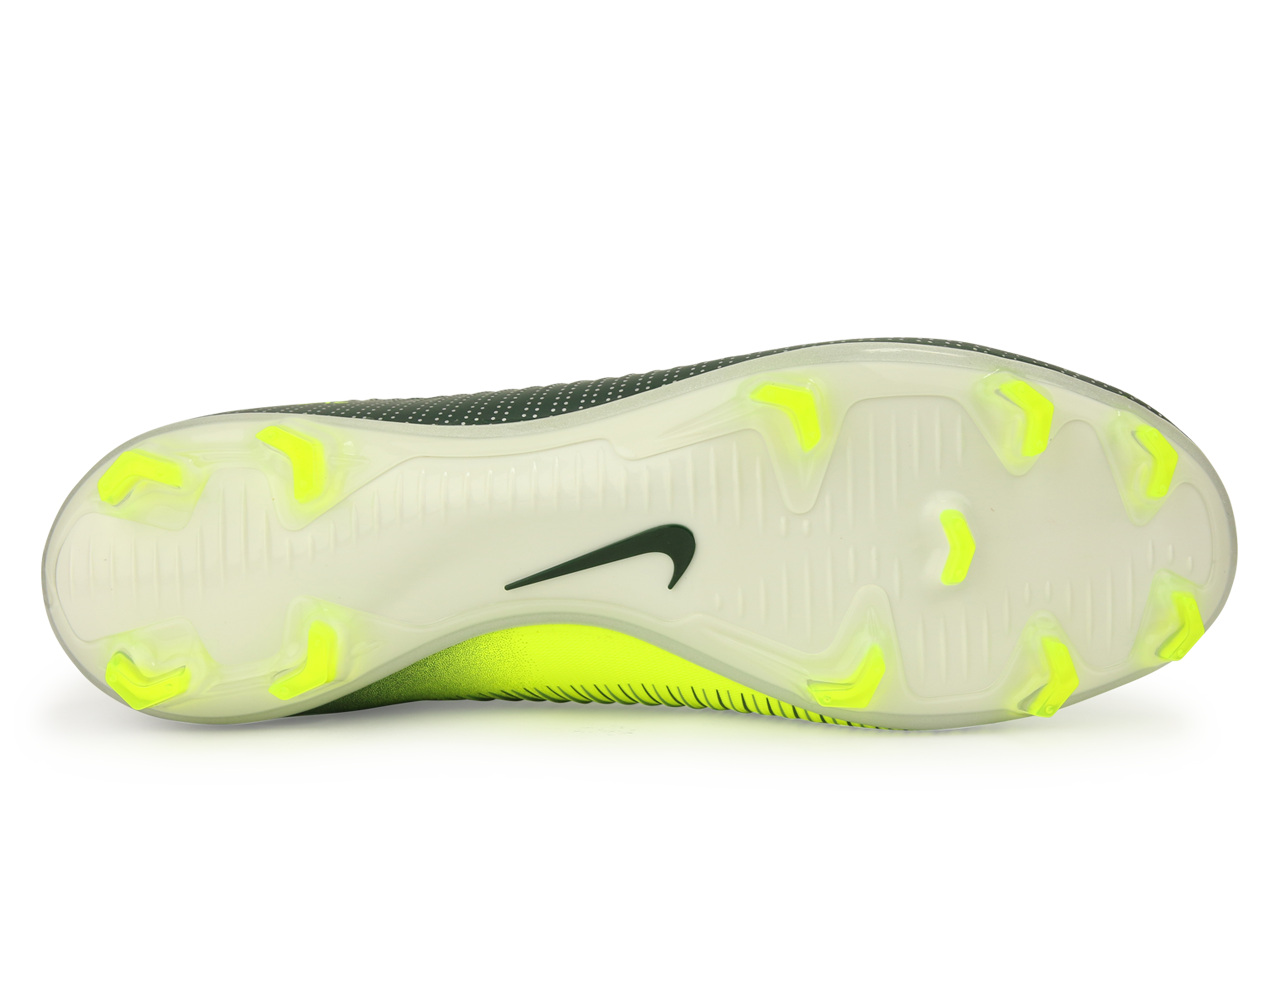 Nike Men's Mercurial Veloce III DF CR7 FG Seaweed/Volt/Hasta/White